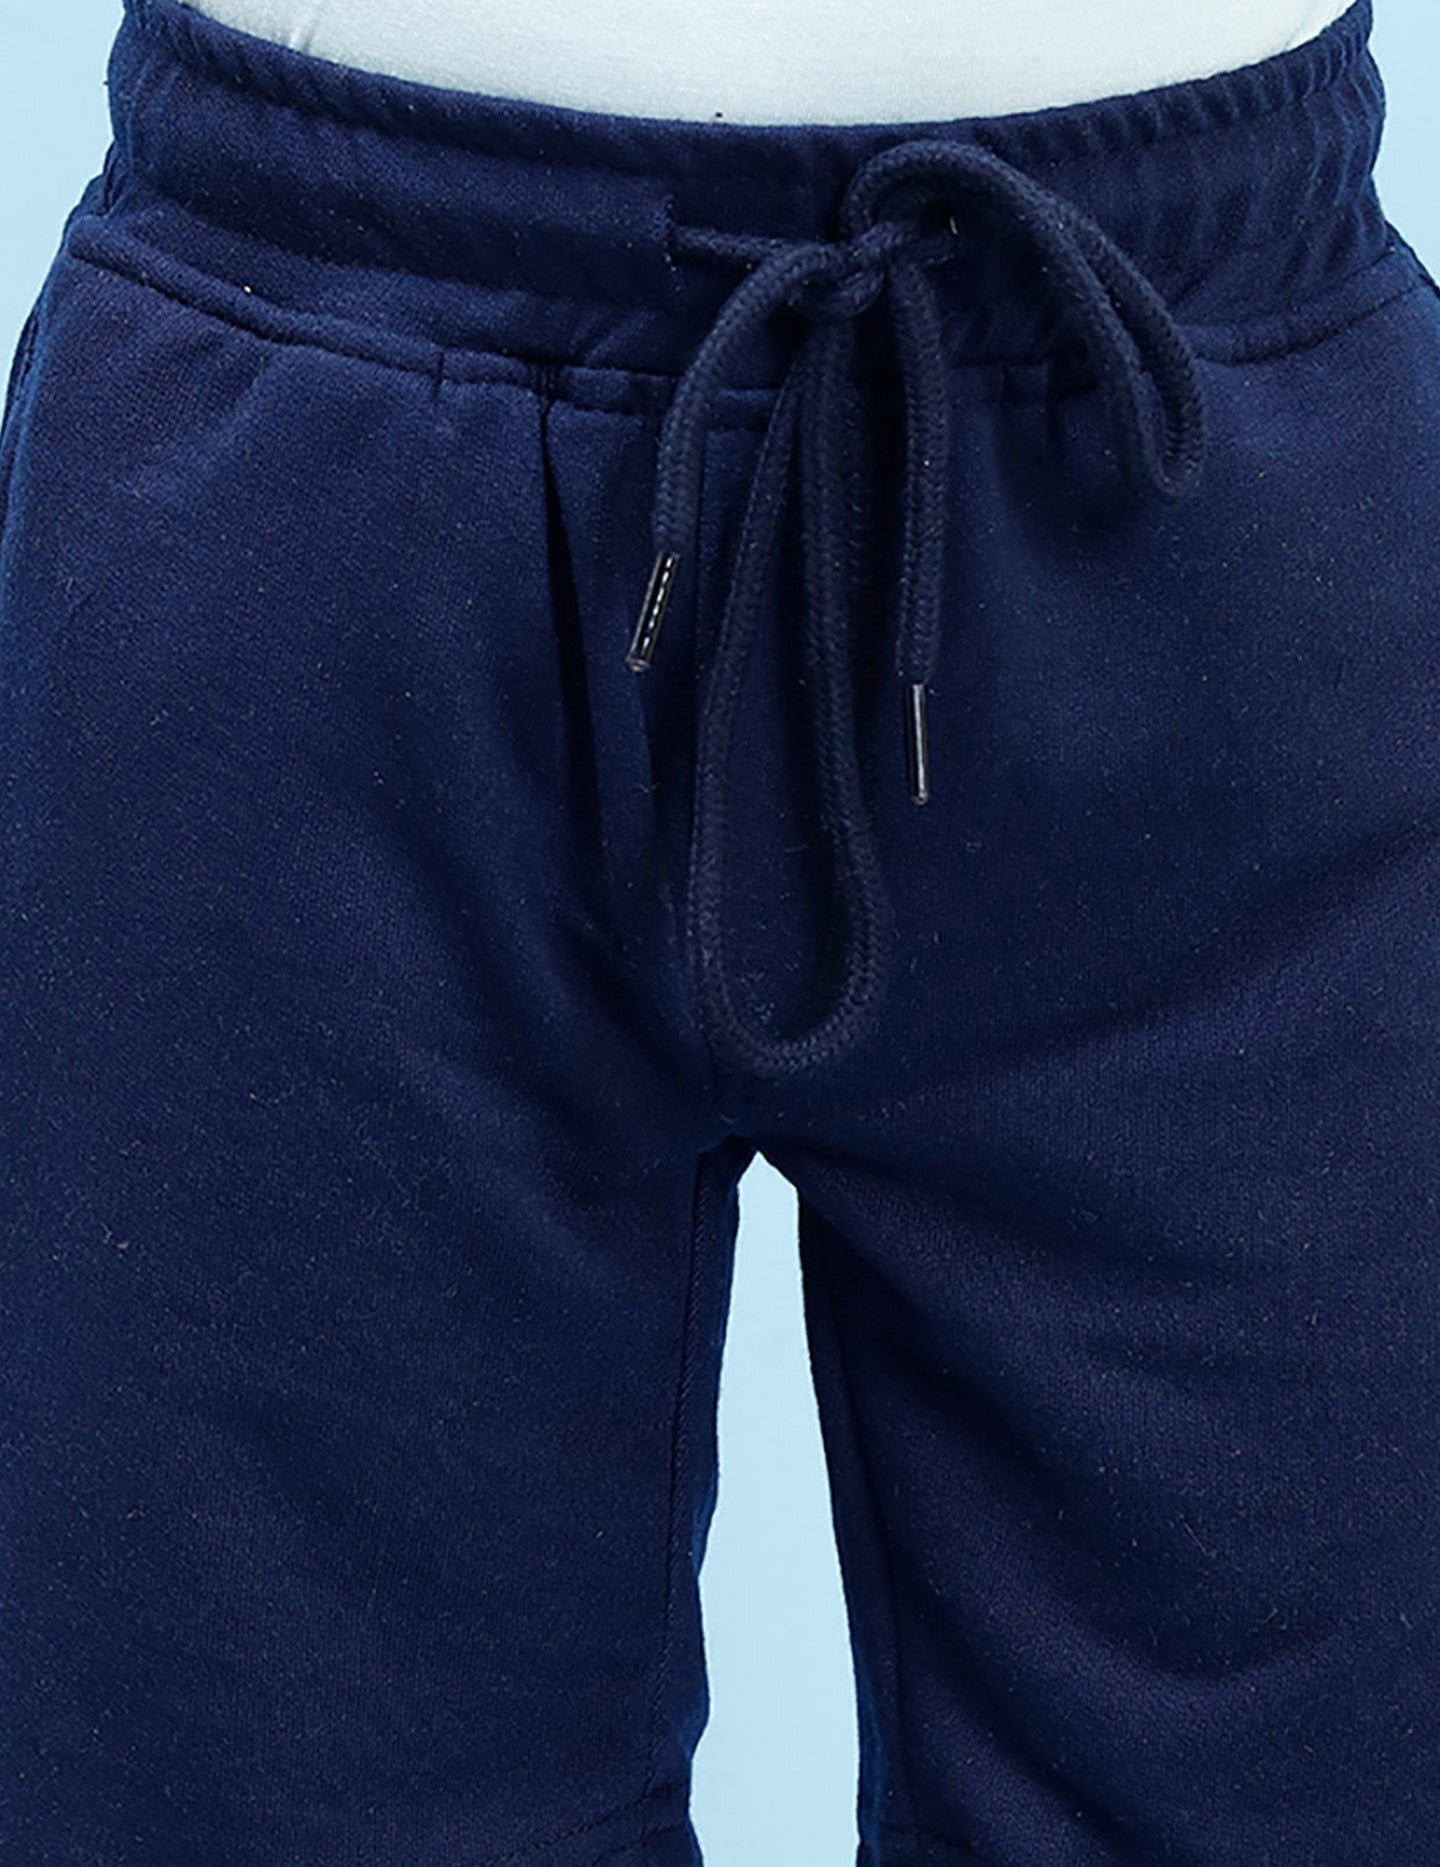 Nusyl Playful Printed Navy Blue Boys Shorts